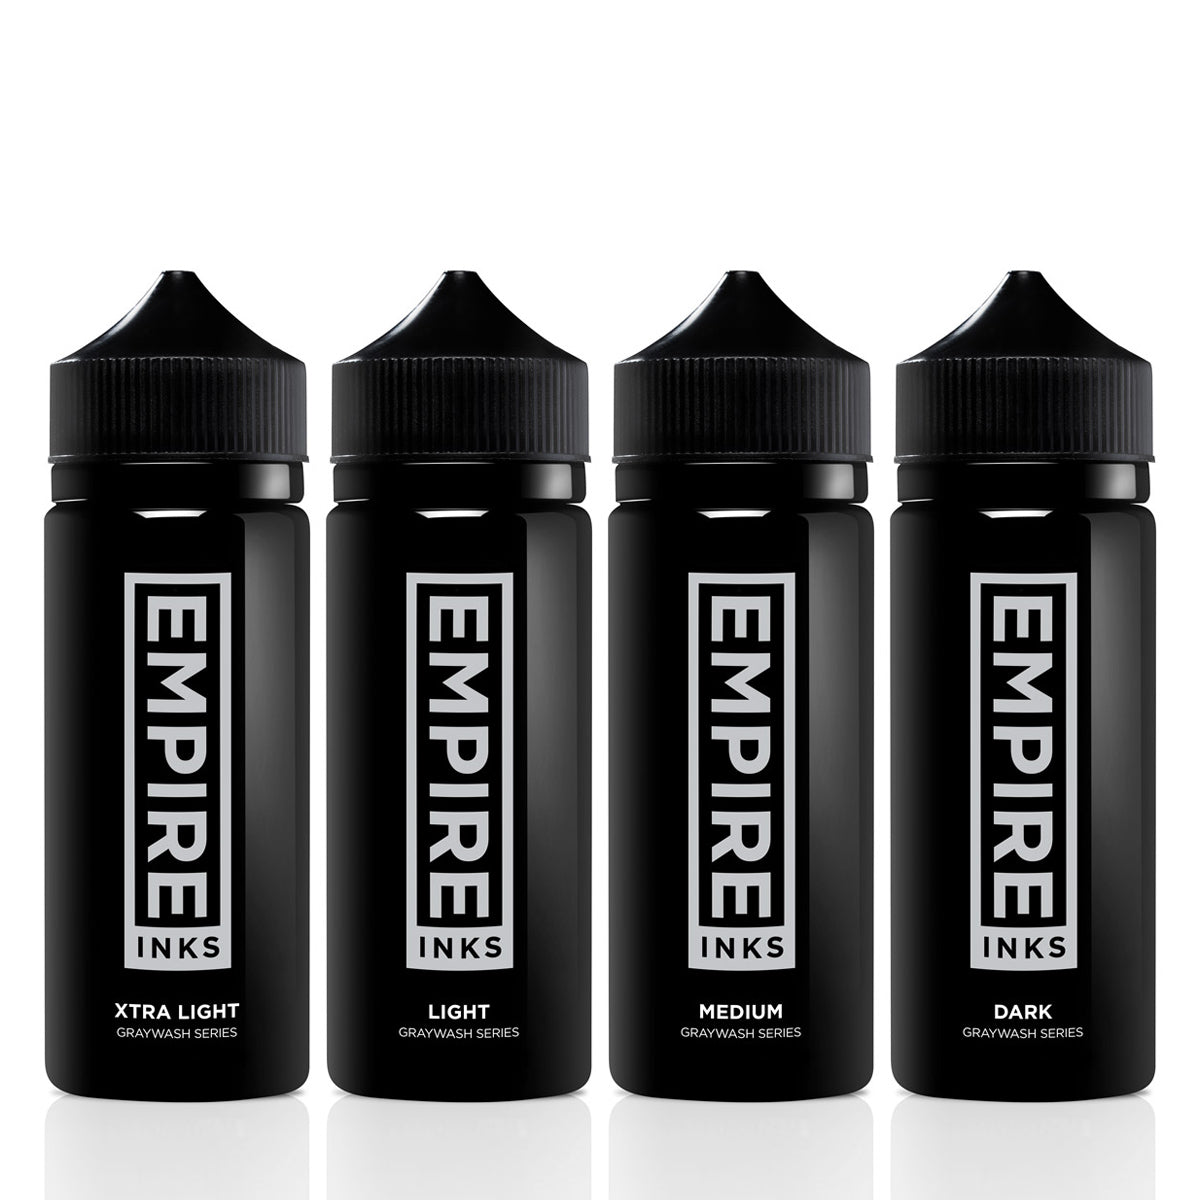 Empire Inks - 4 Stage Graywash Ink Set by TATSoul - Light, Medium, Dark and Xtra Light Available